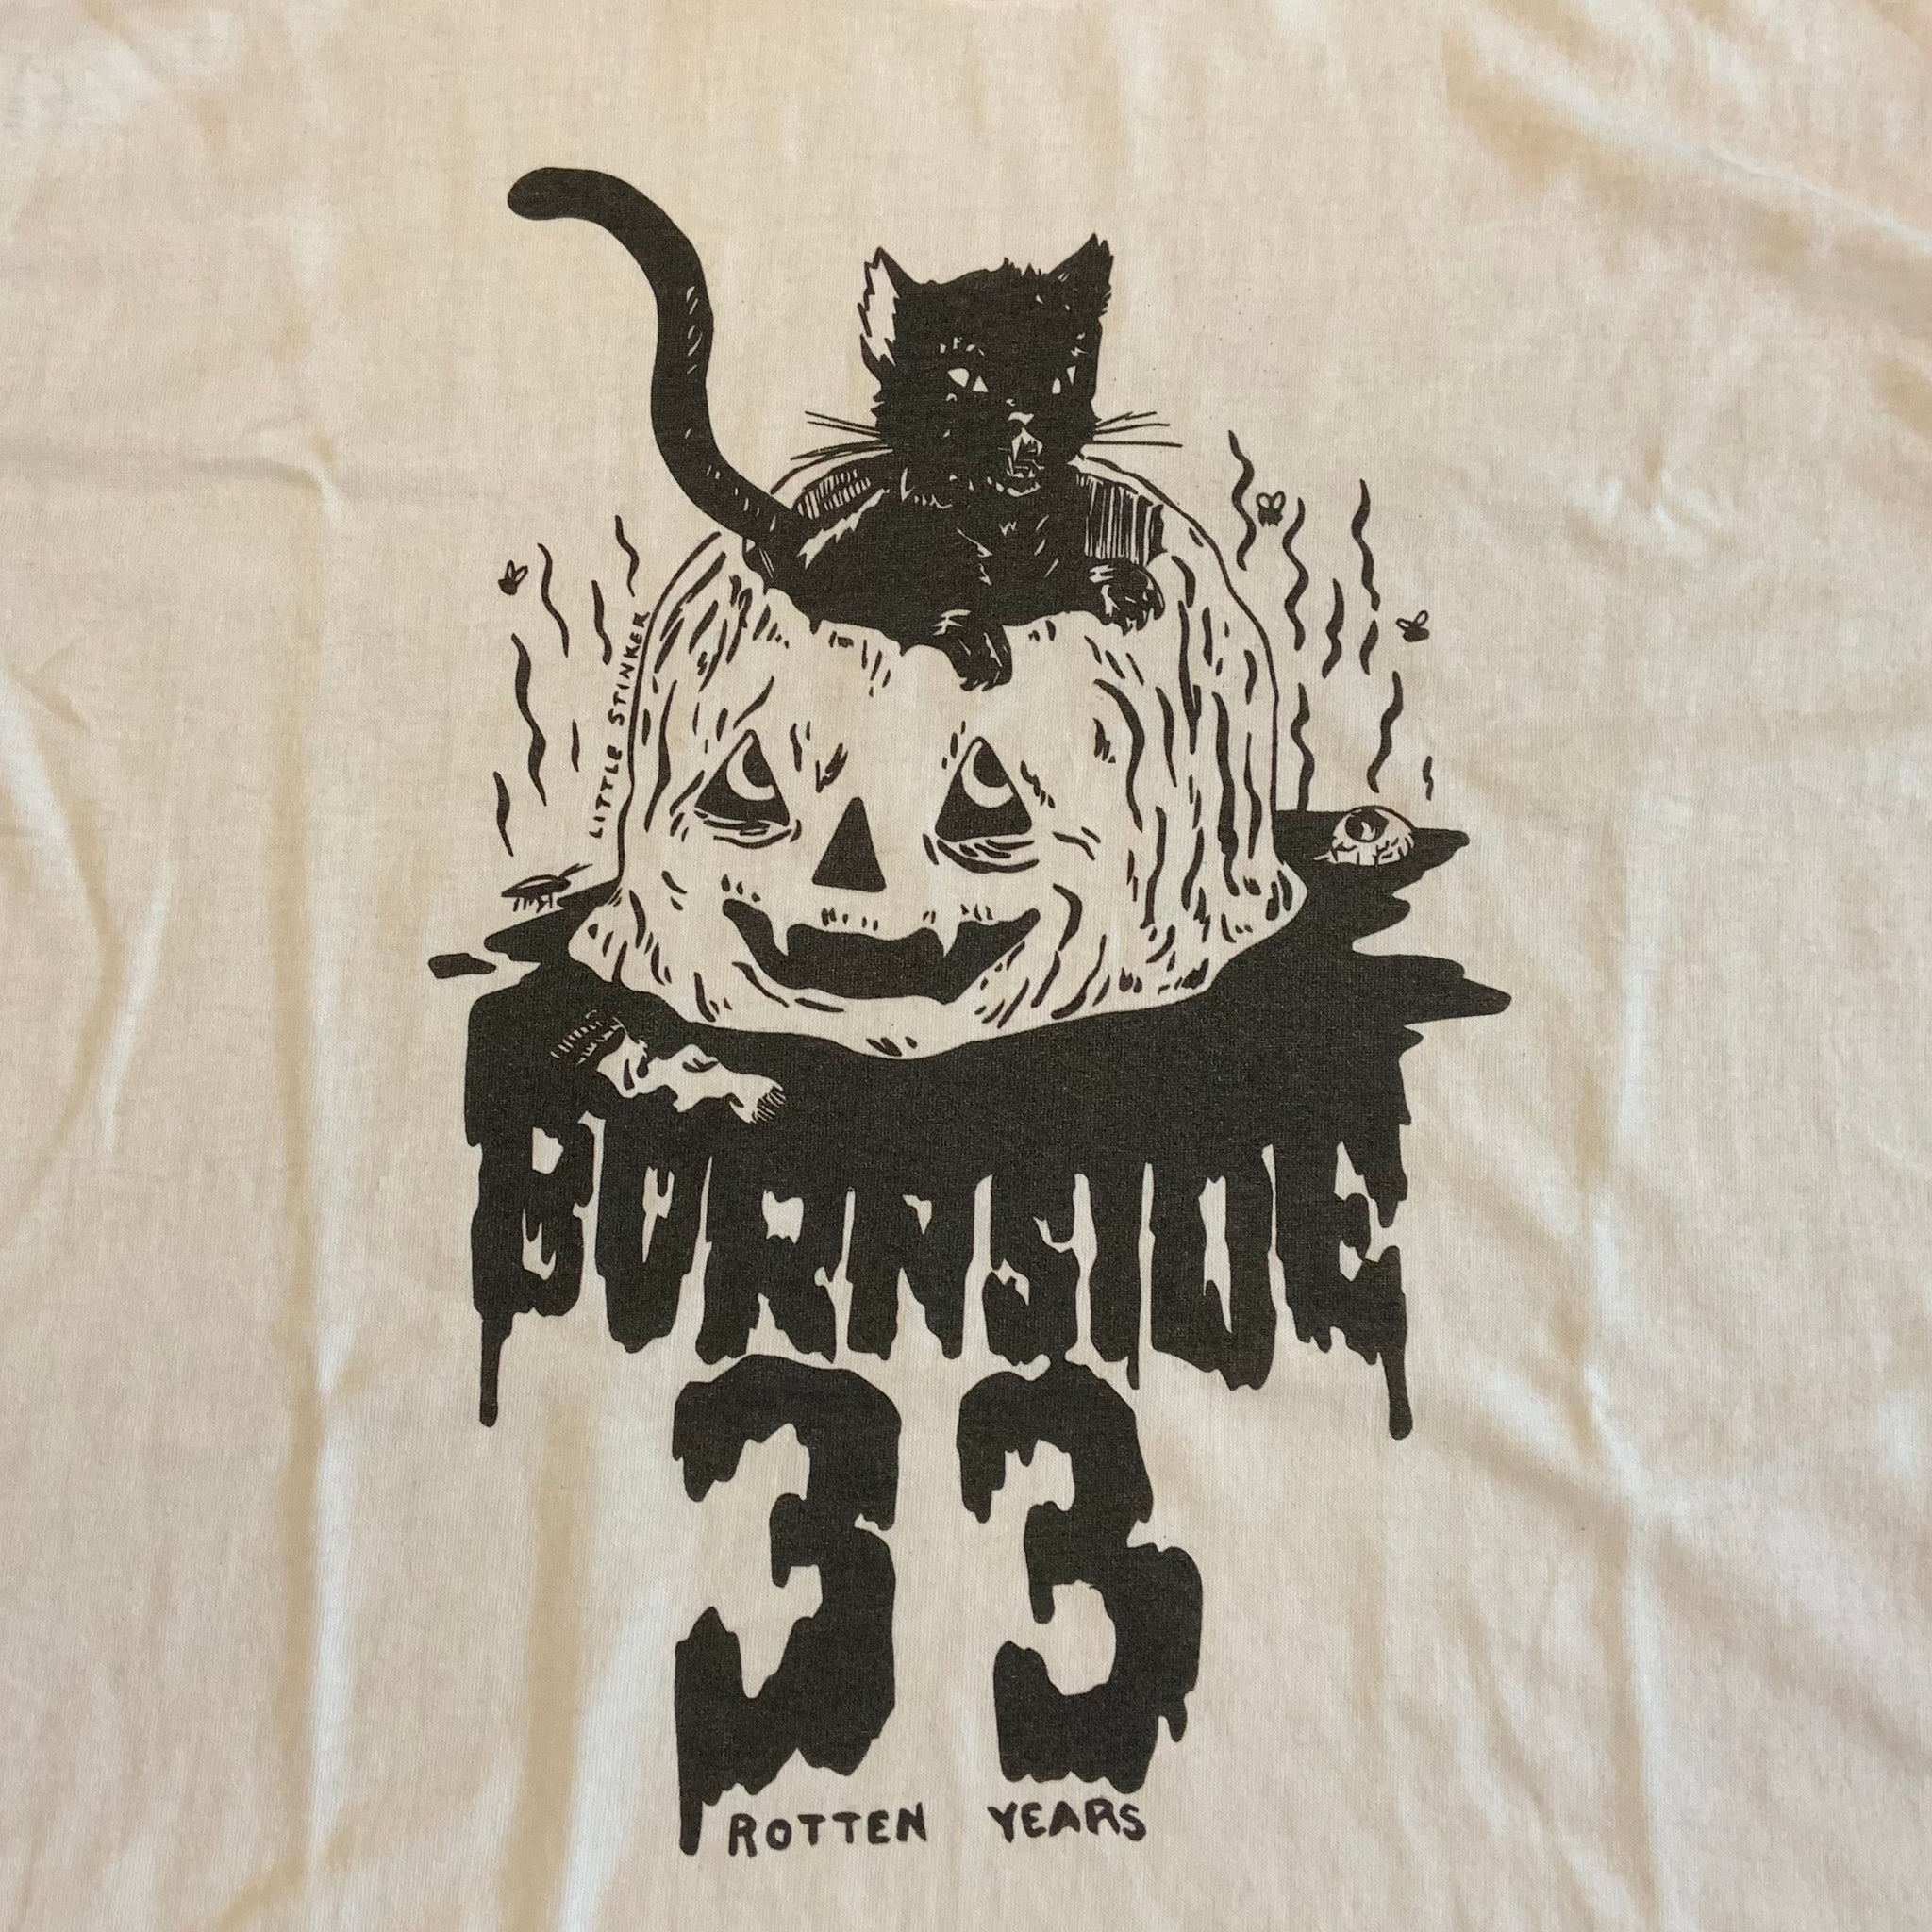 Burnside Skatepark "33rd anniversary" Limited Edition Fundraiser Shirt